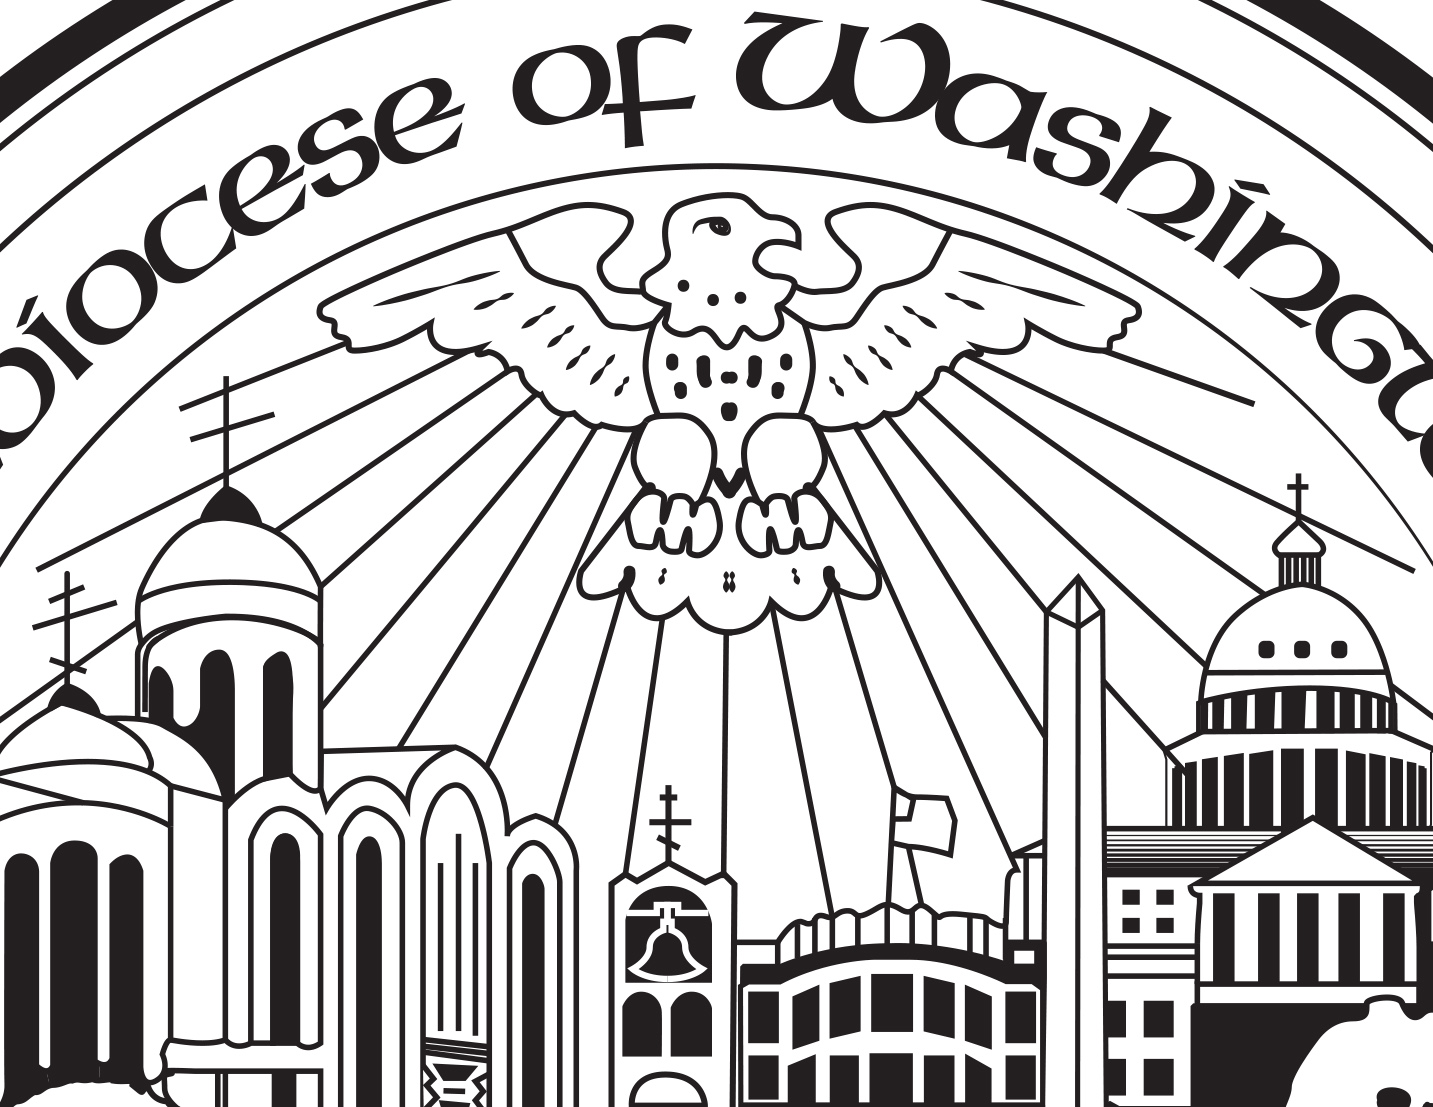 OCA-Archdiocese of WDC BW-2.jpg